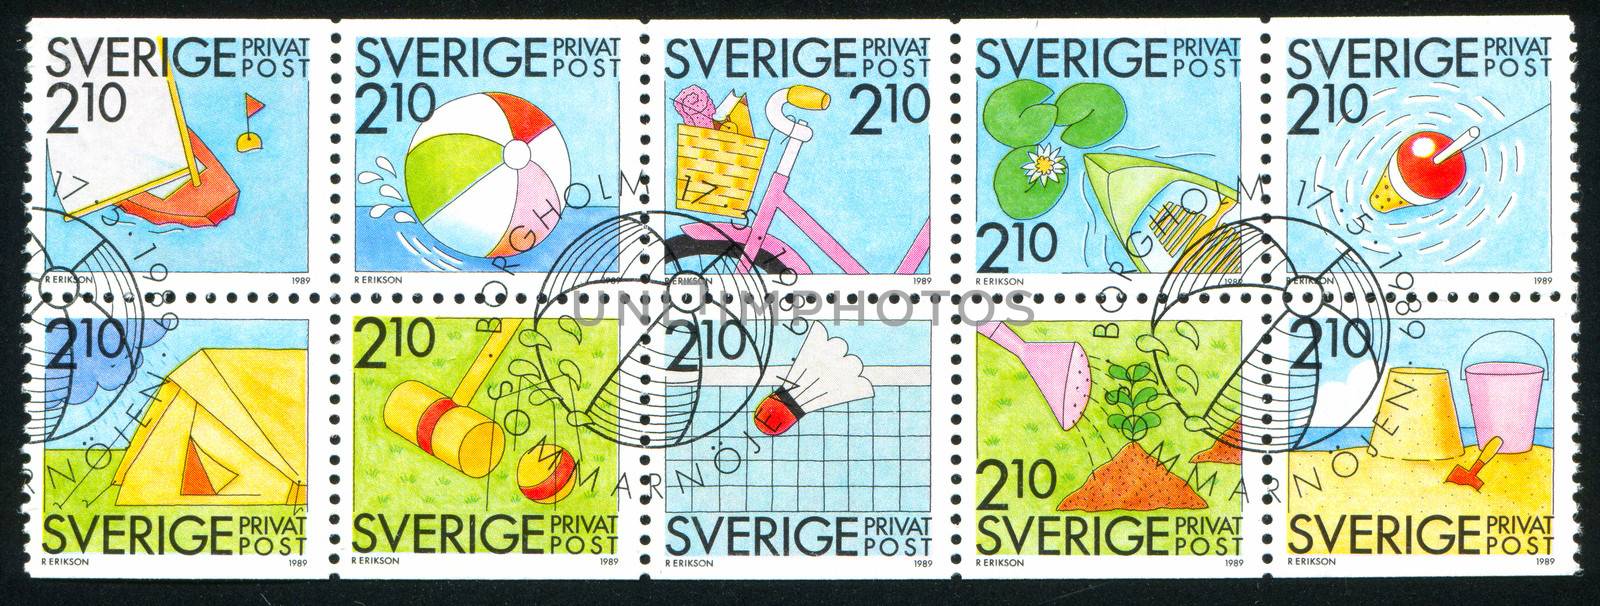 SWEDEN - CIRCA 1989: stamp printed by Sweden, shows Beach ball, circa 1989